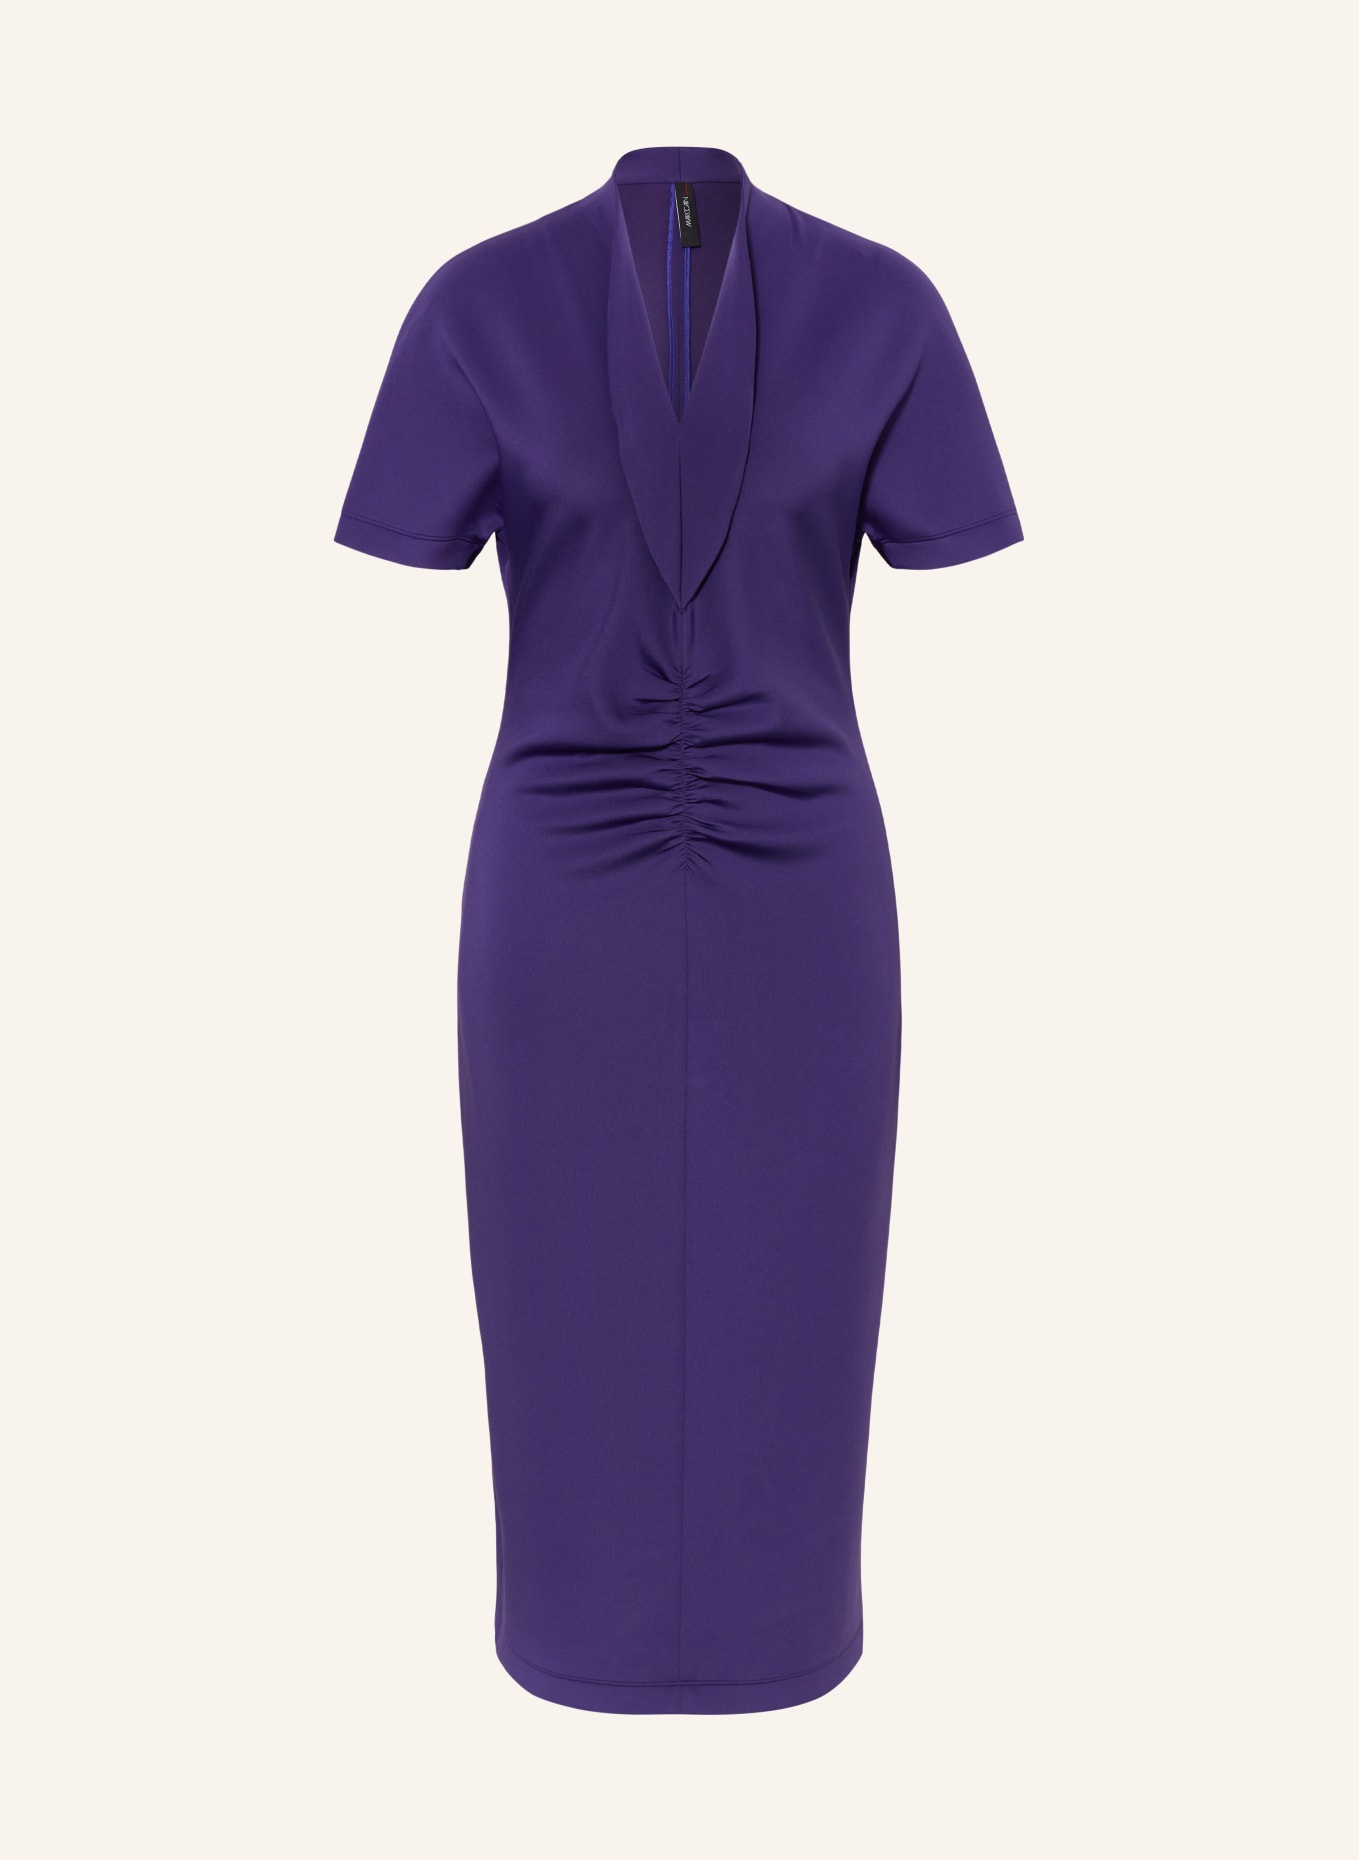 MARC CAIN Jerseykleid, Farbe: 755 deep violet (Bild 1)